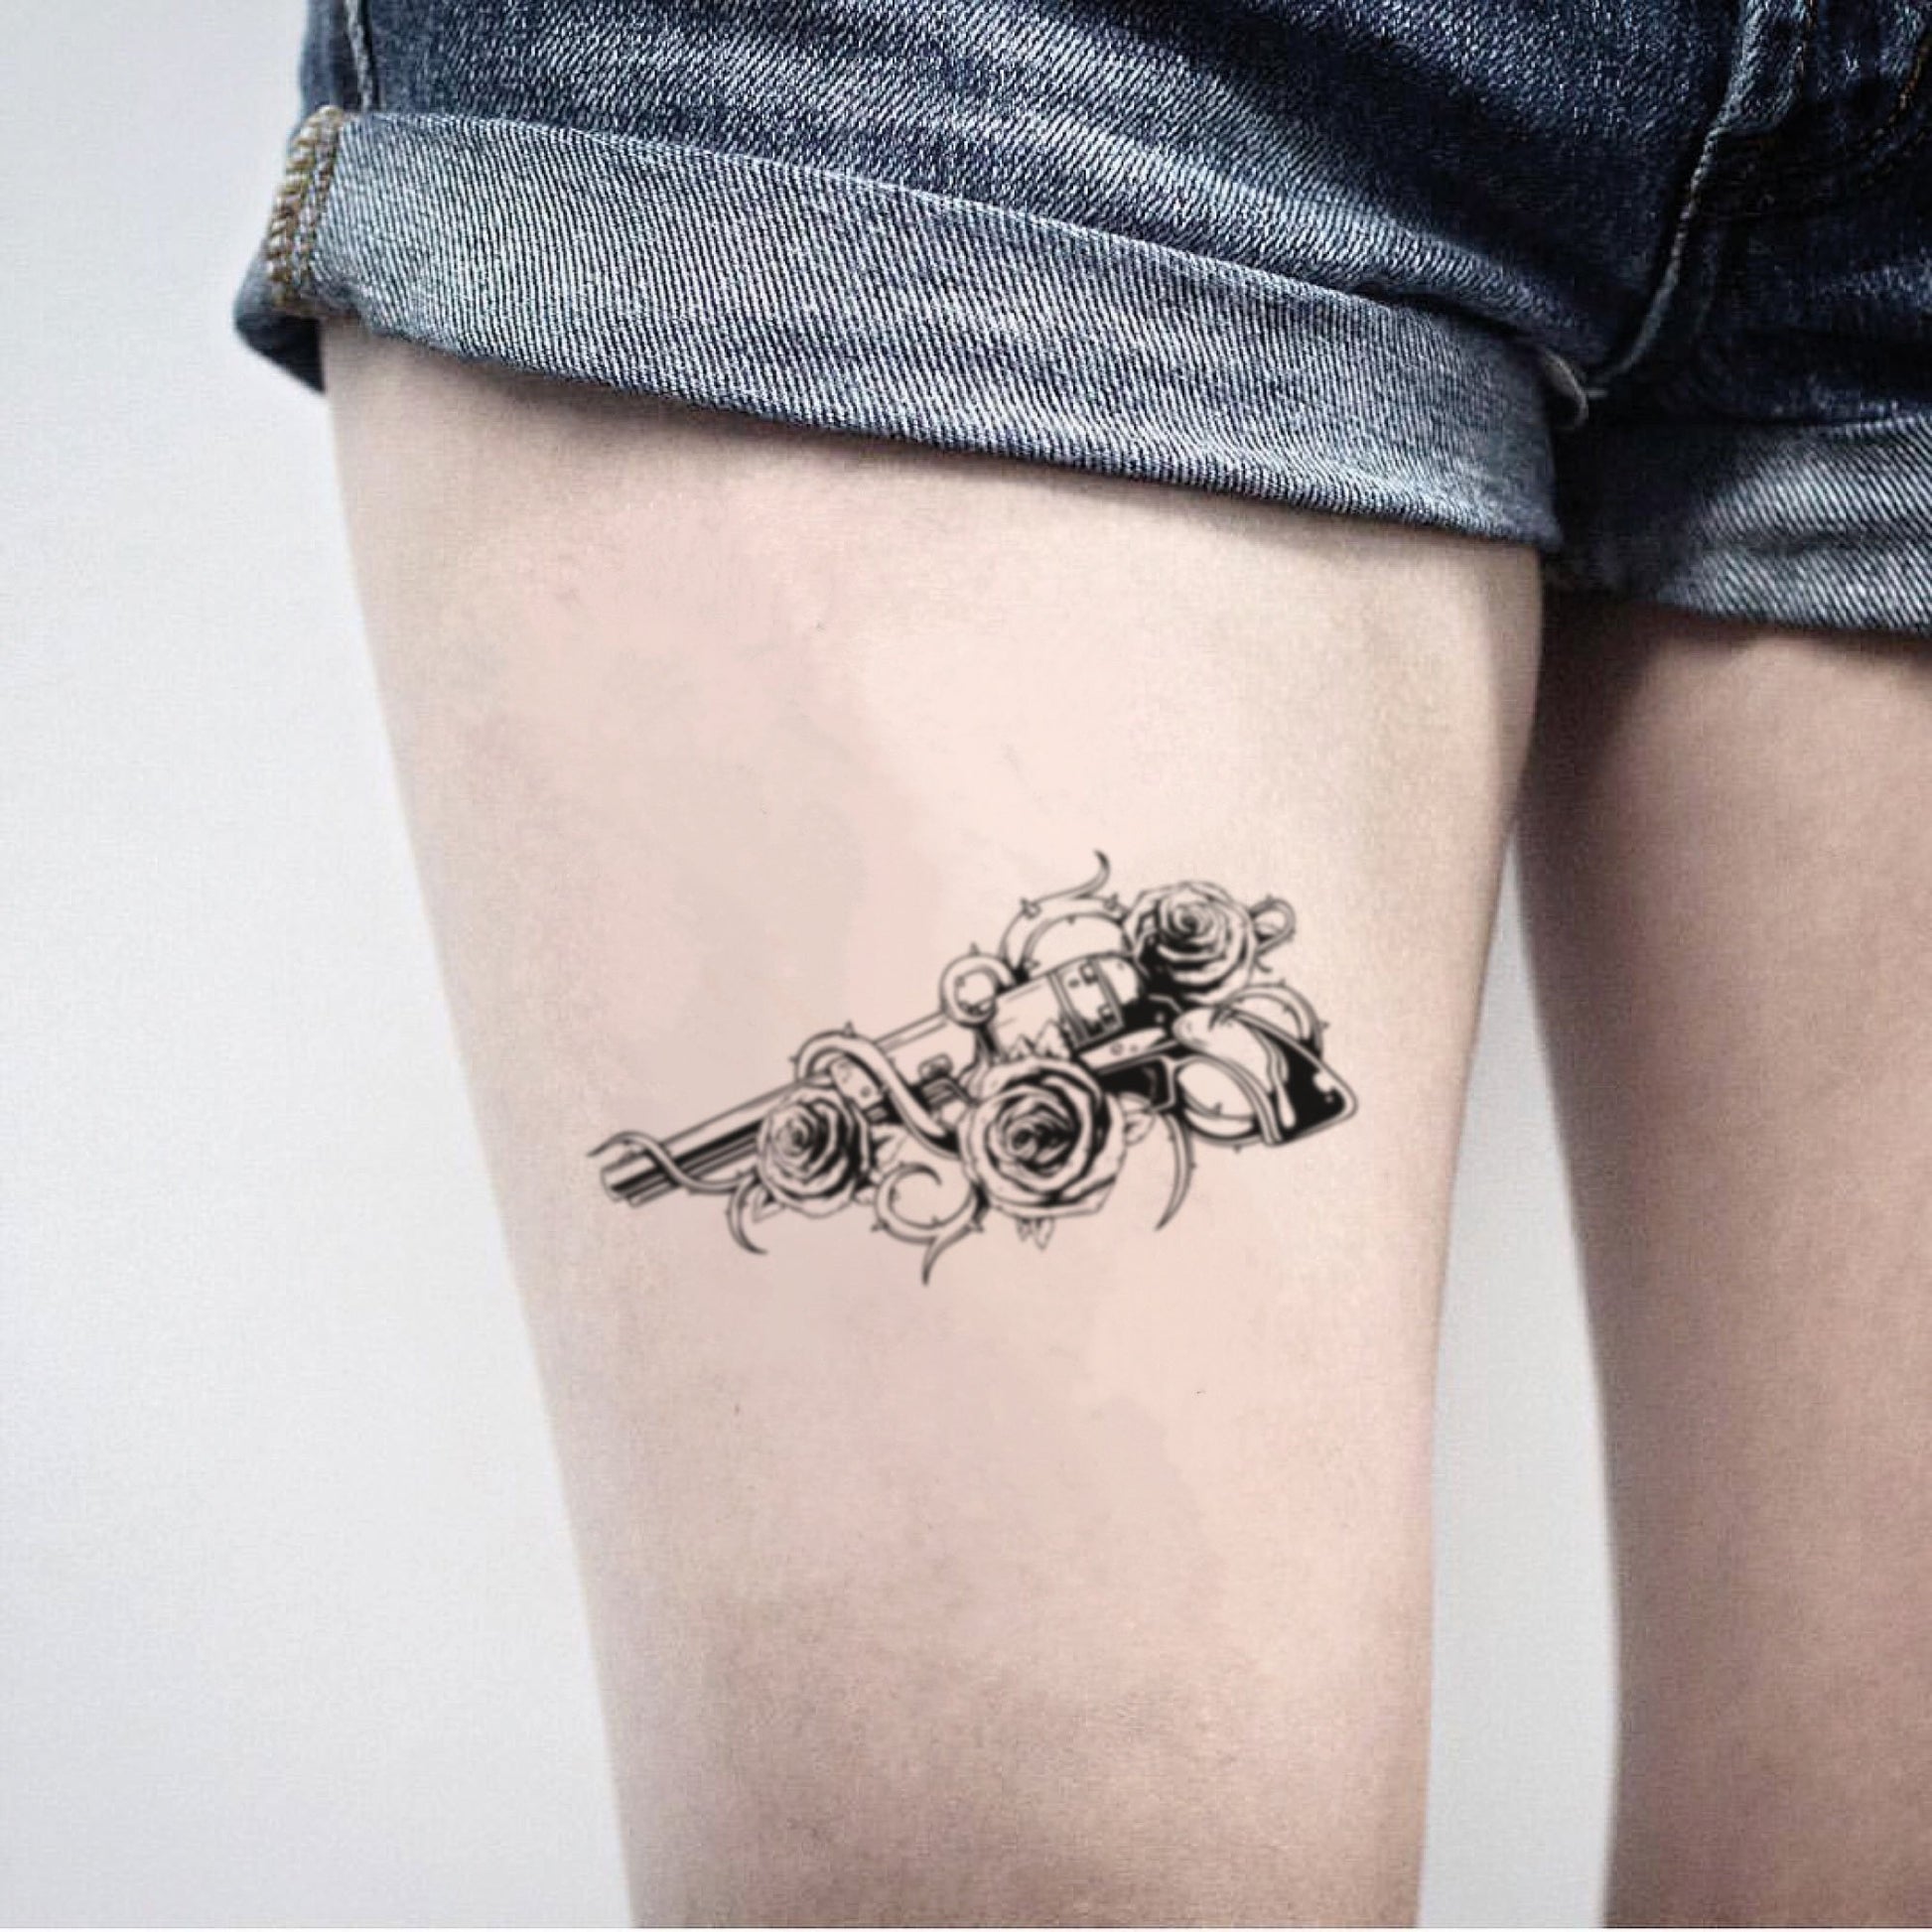 fake big gun and roses illustrative temporary tattoo sticker design idea on thigh